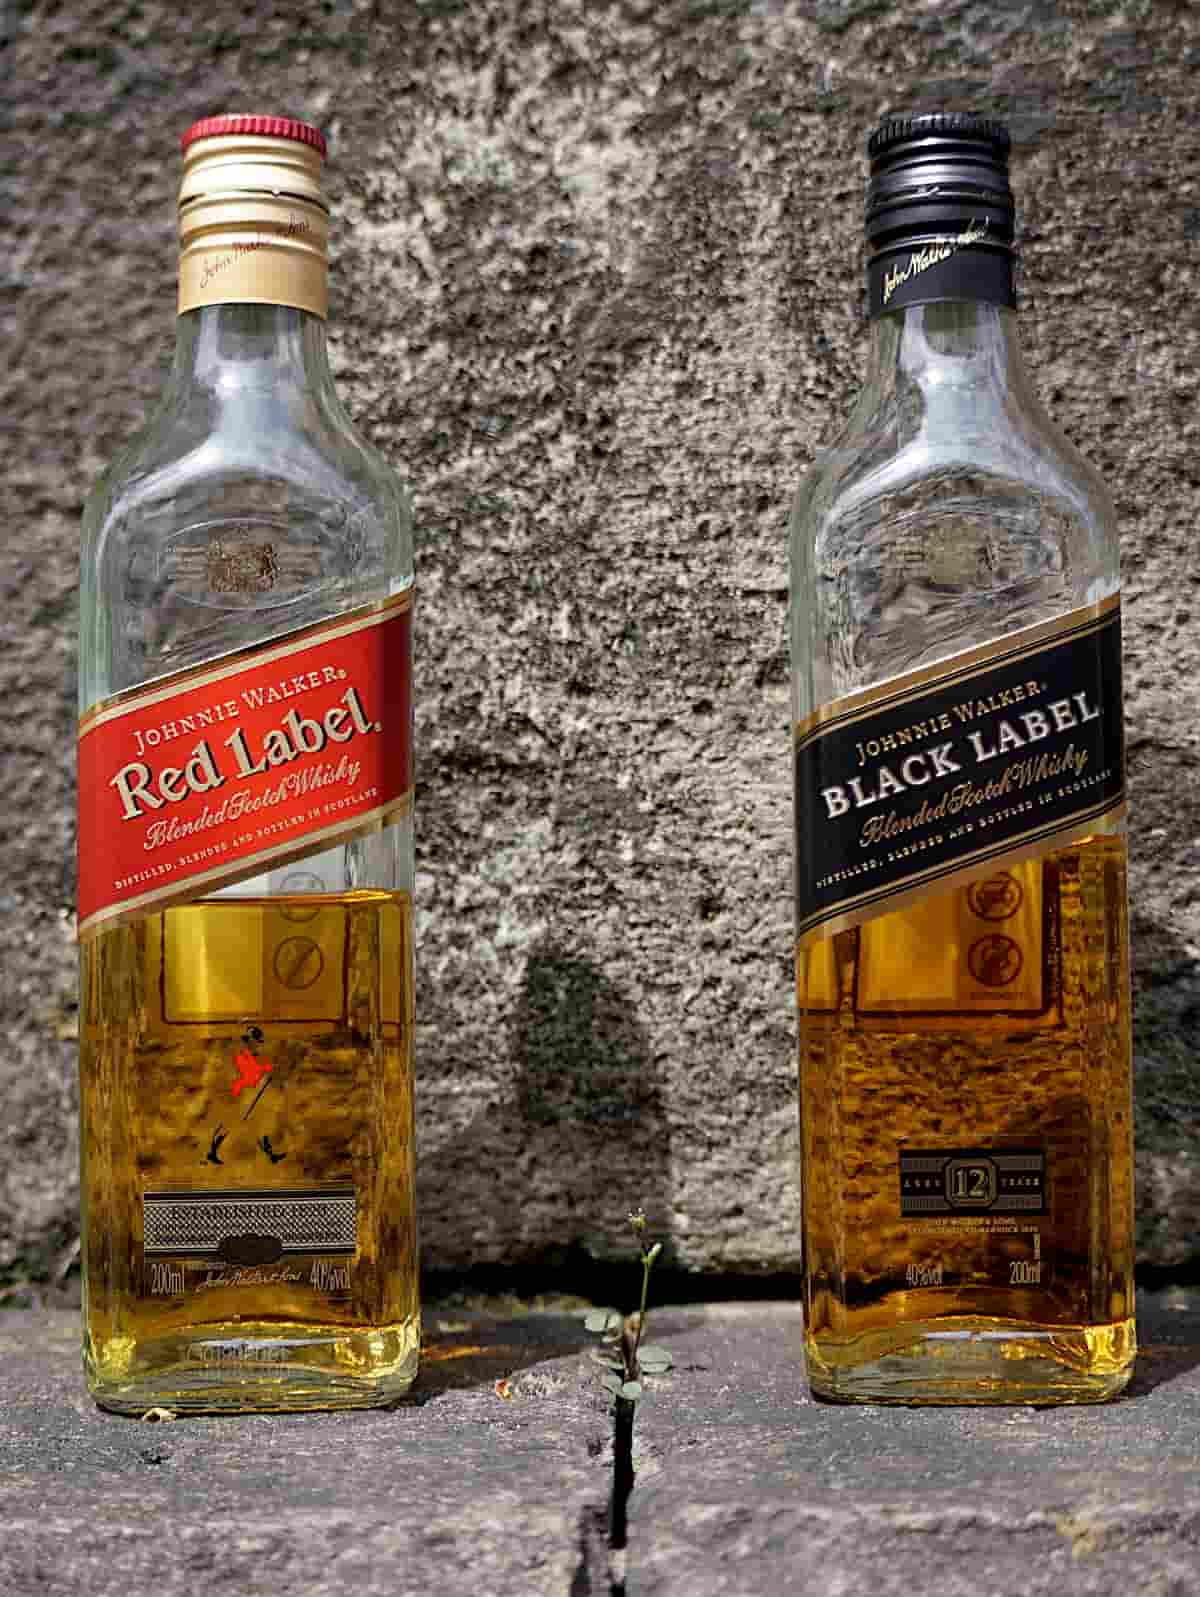 Johnnie Walker Red [Comparison] Shelf Vs The Black Whiskey